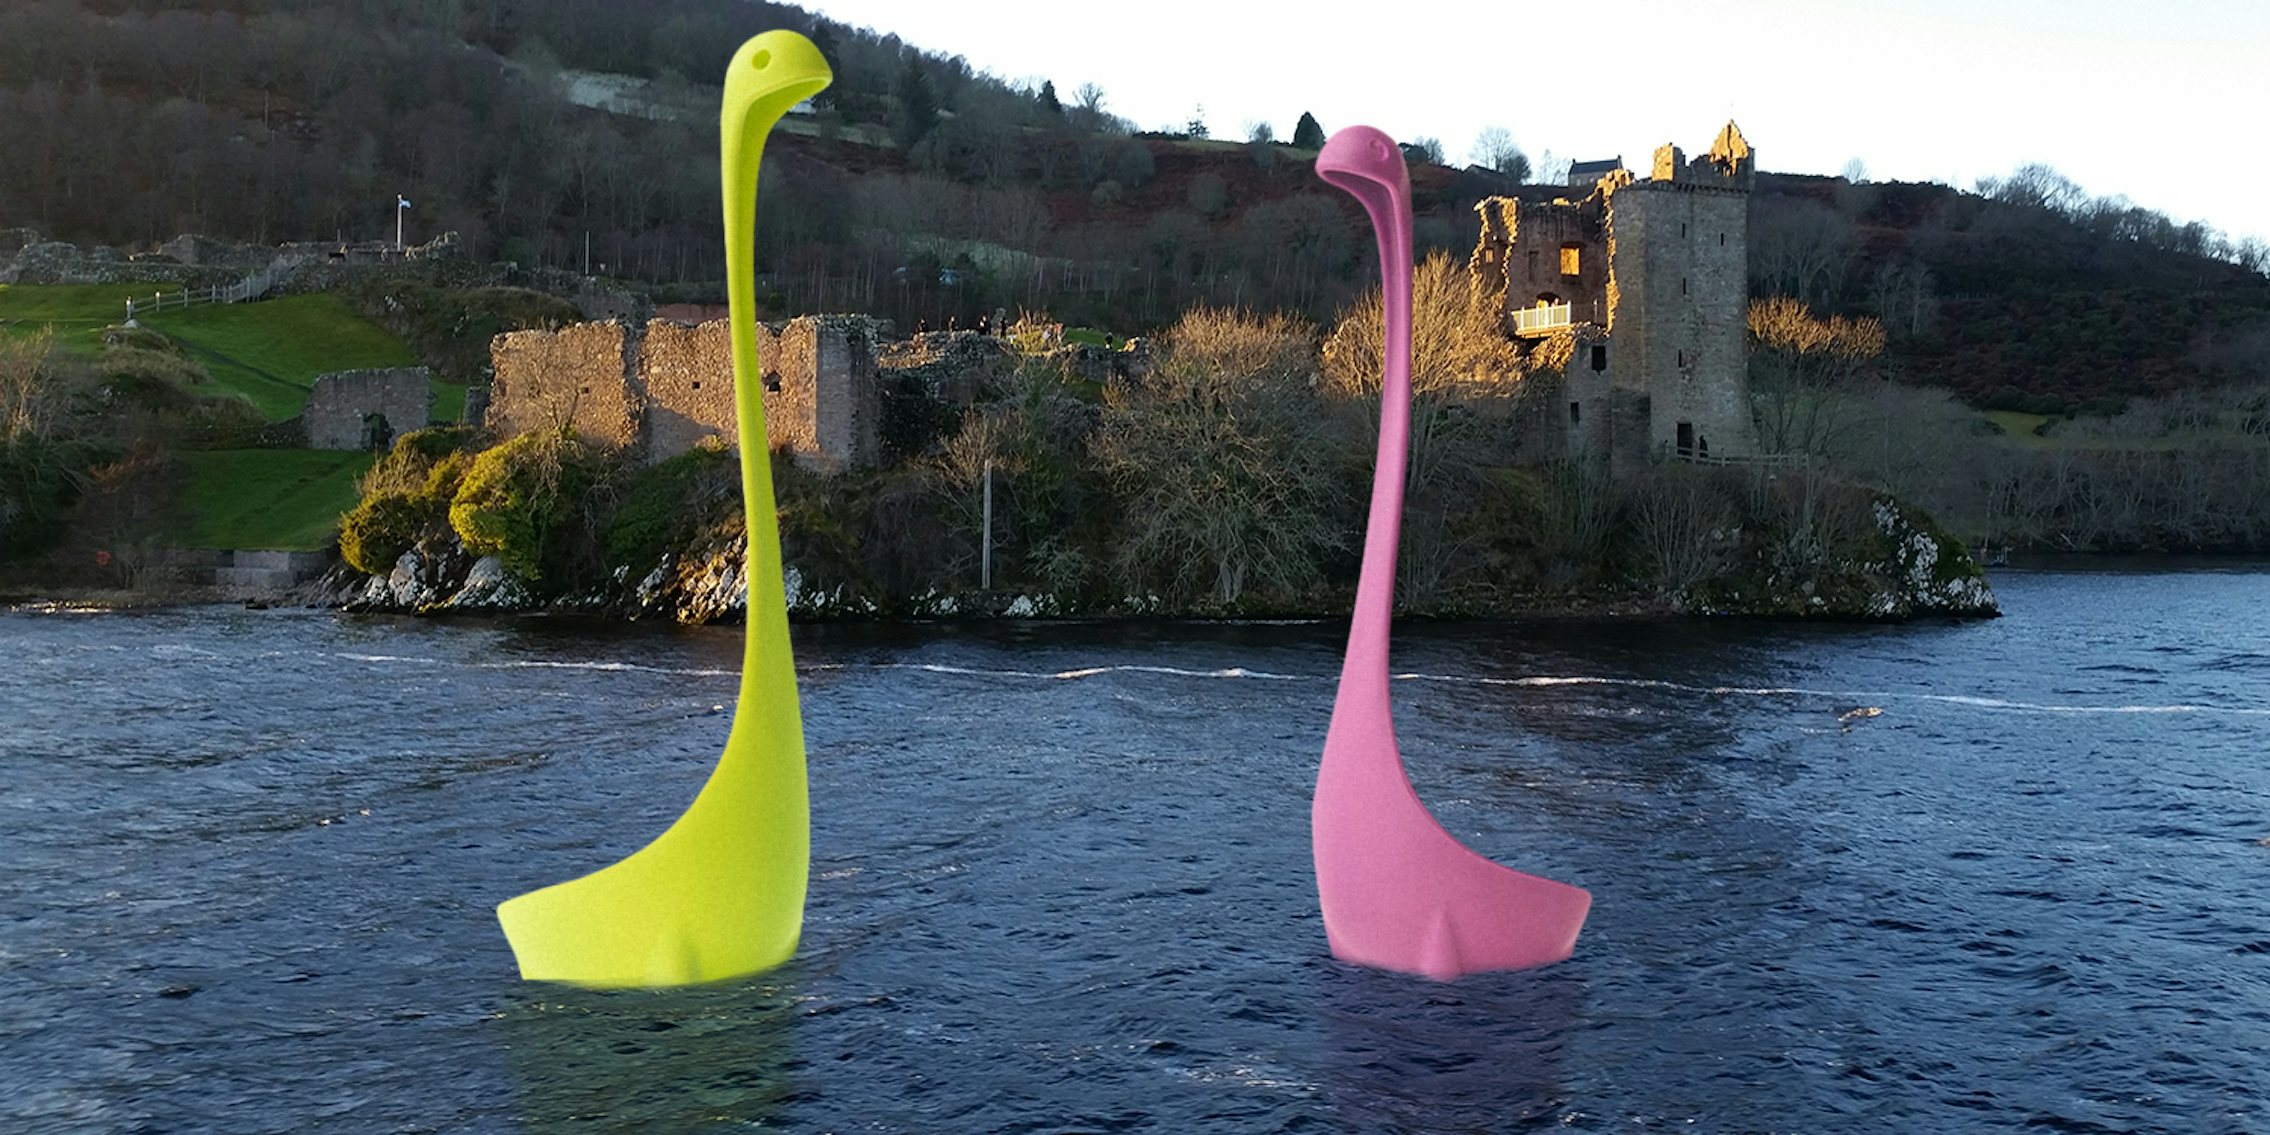 Nessie the Loch Ness Monster Ladles